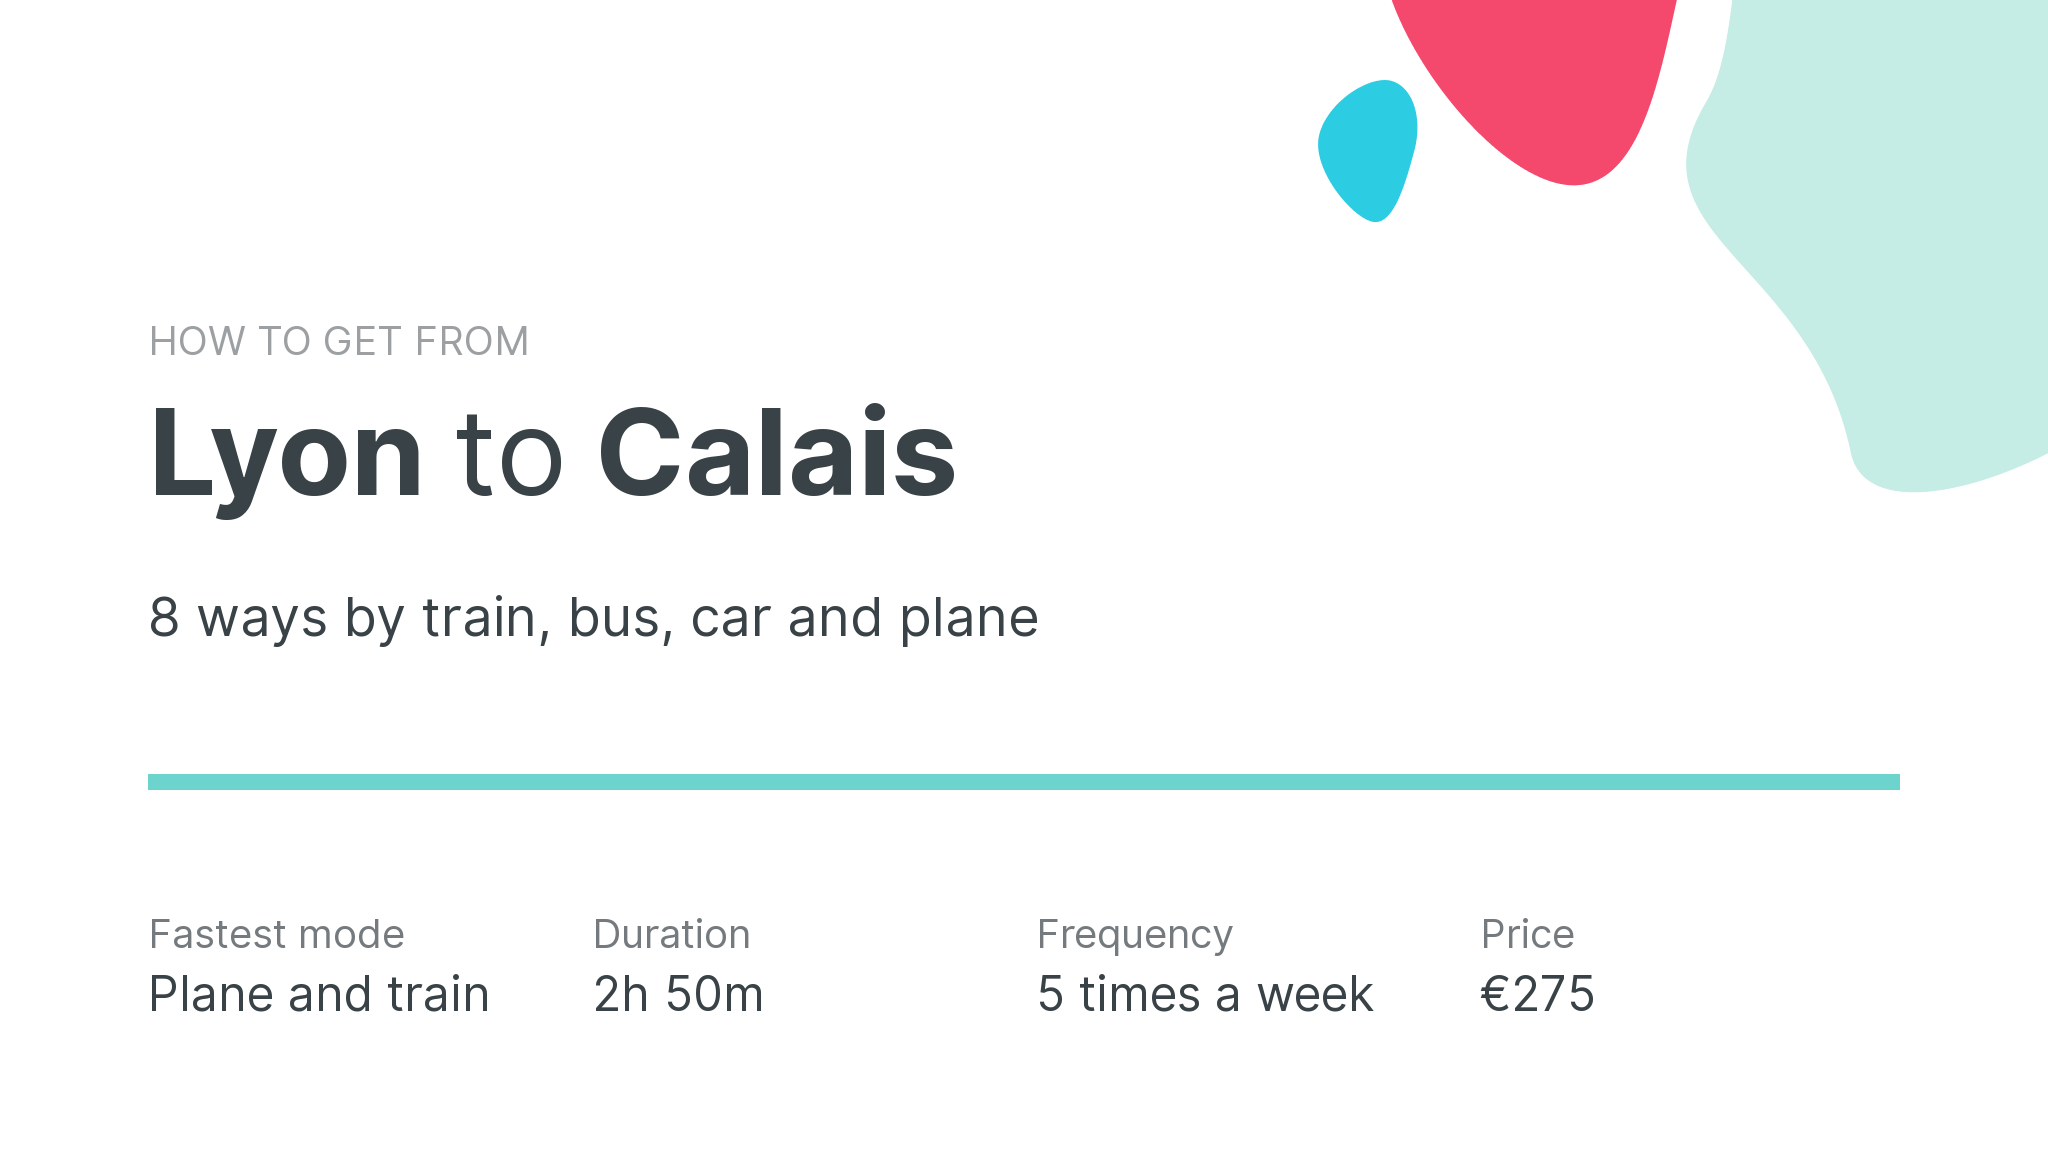 How do I get from Lyon to Calais